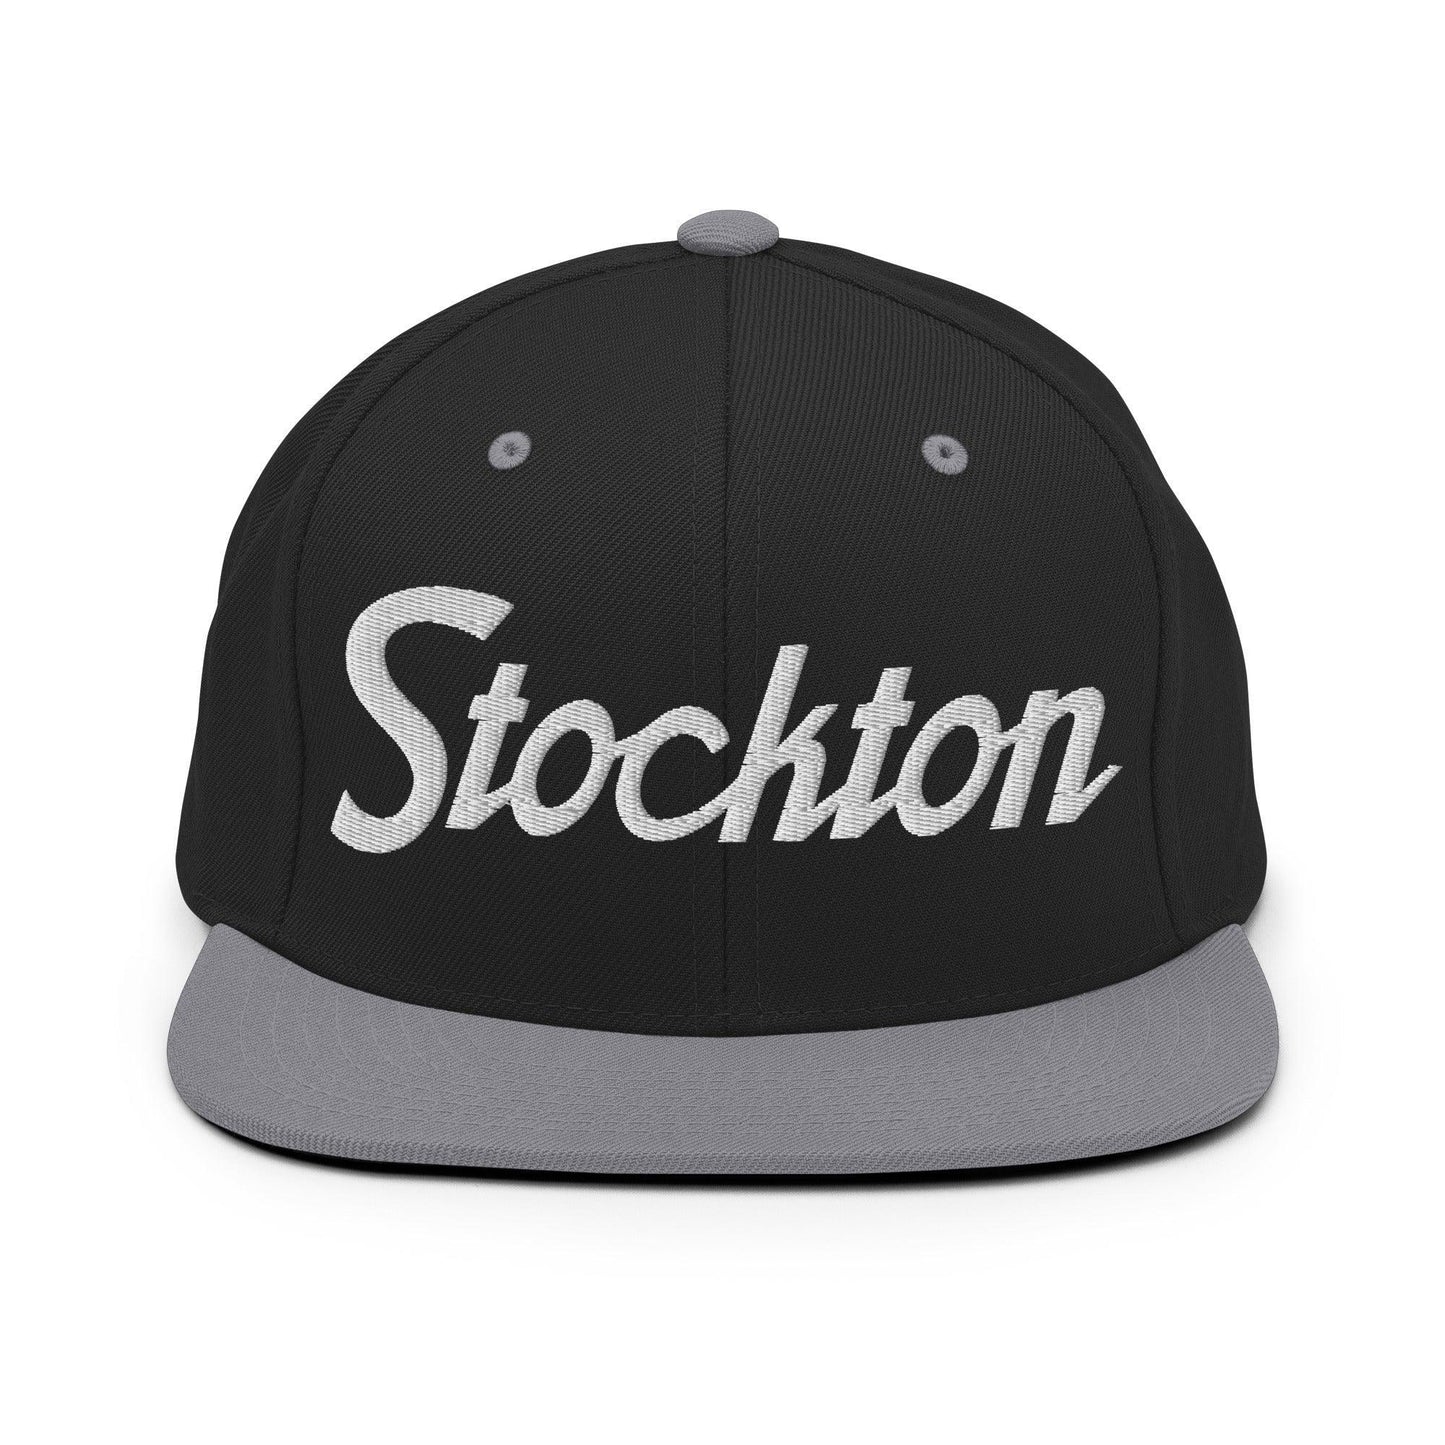 Stockton Script Snapback Hat Black Silver